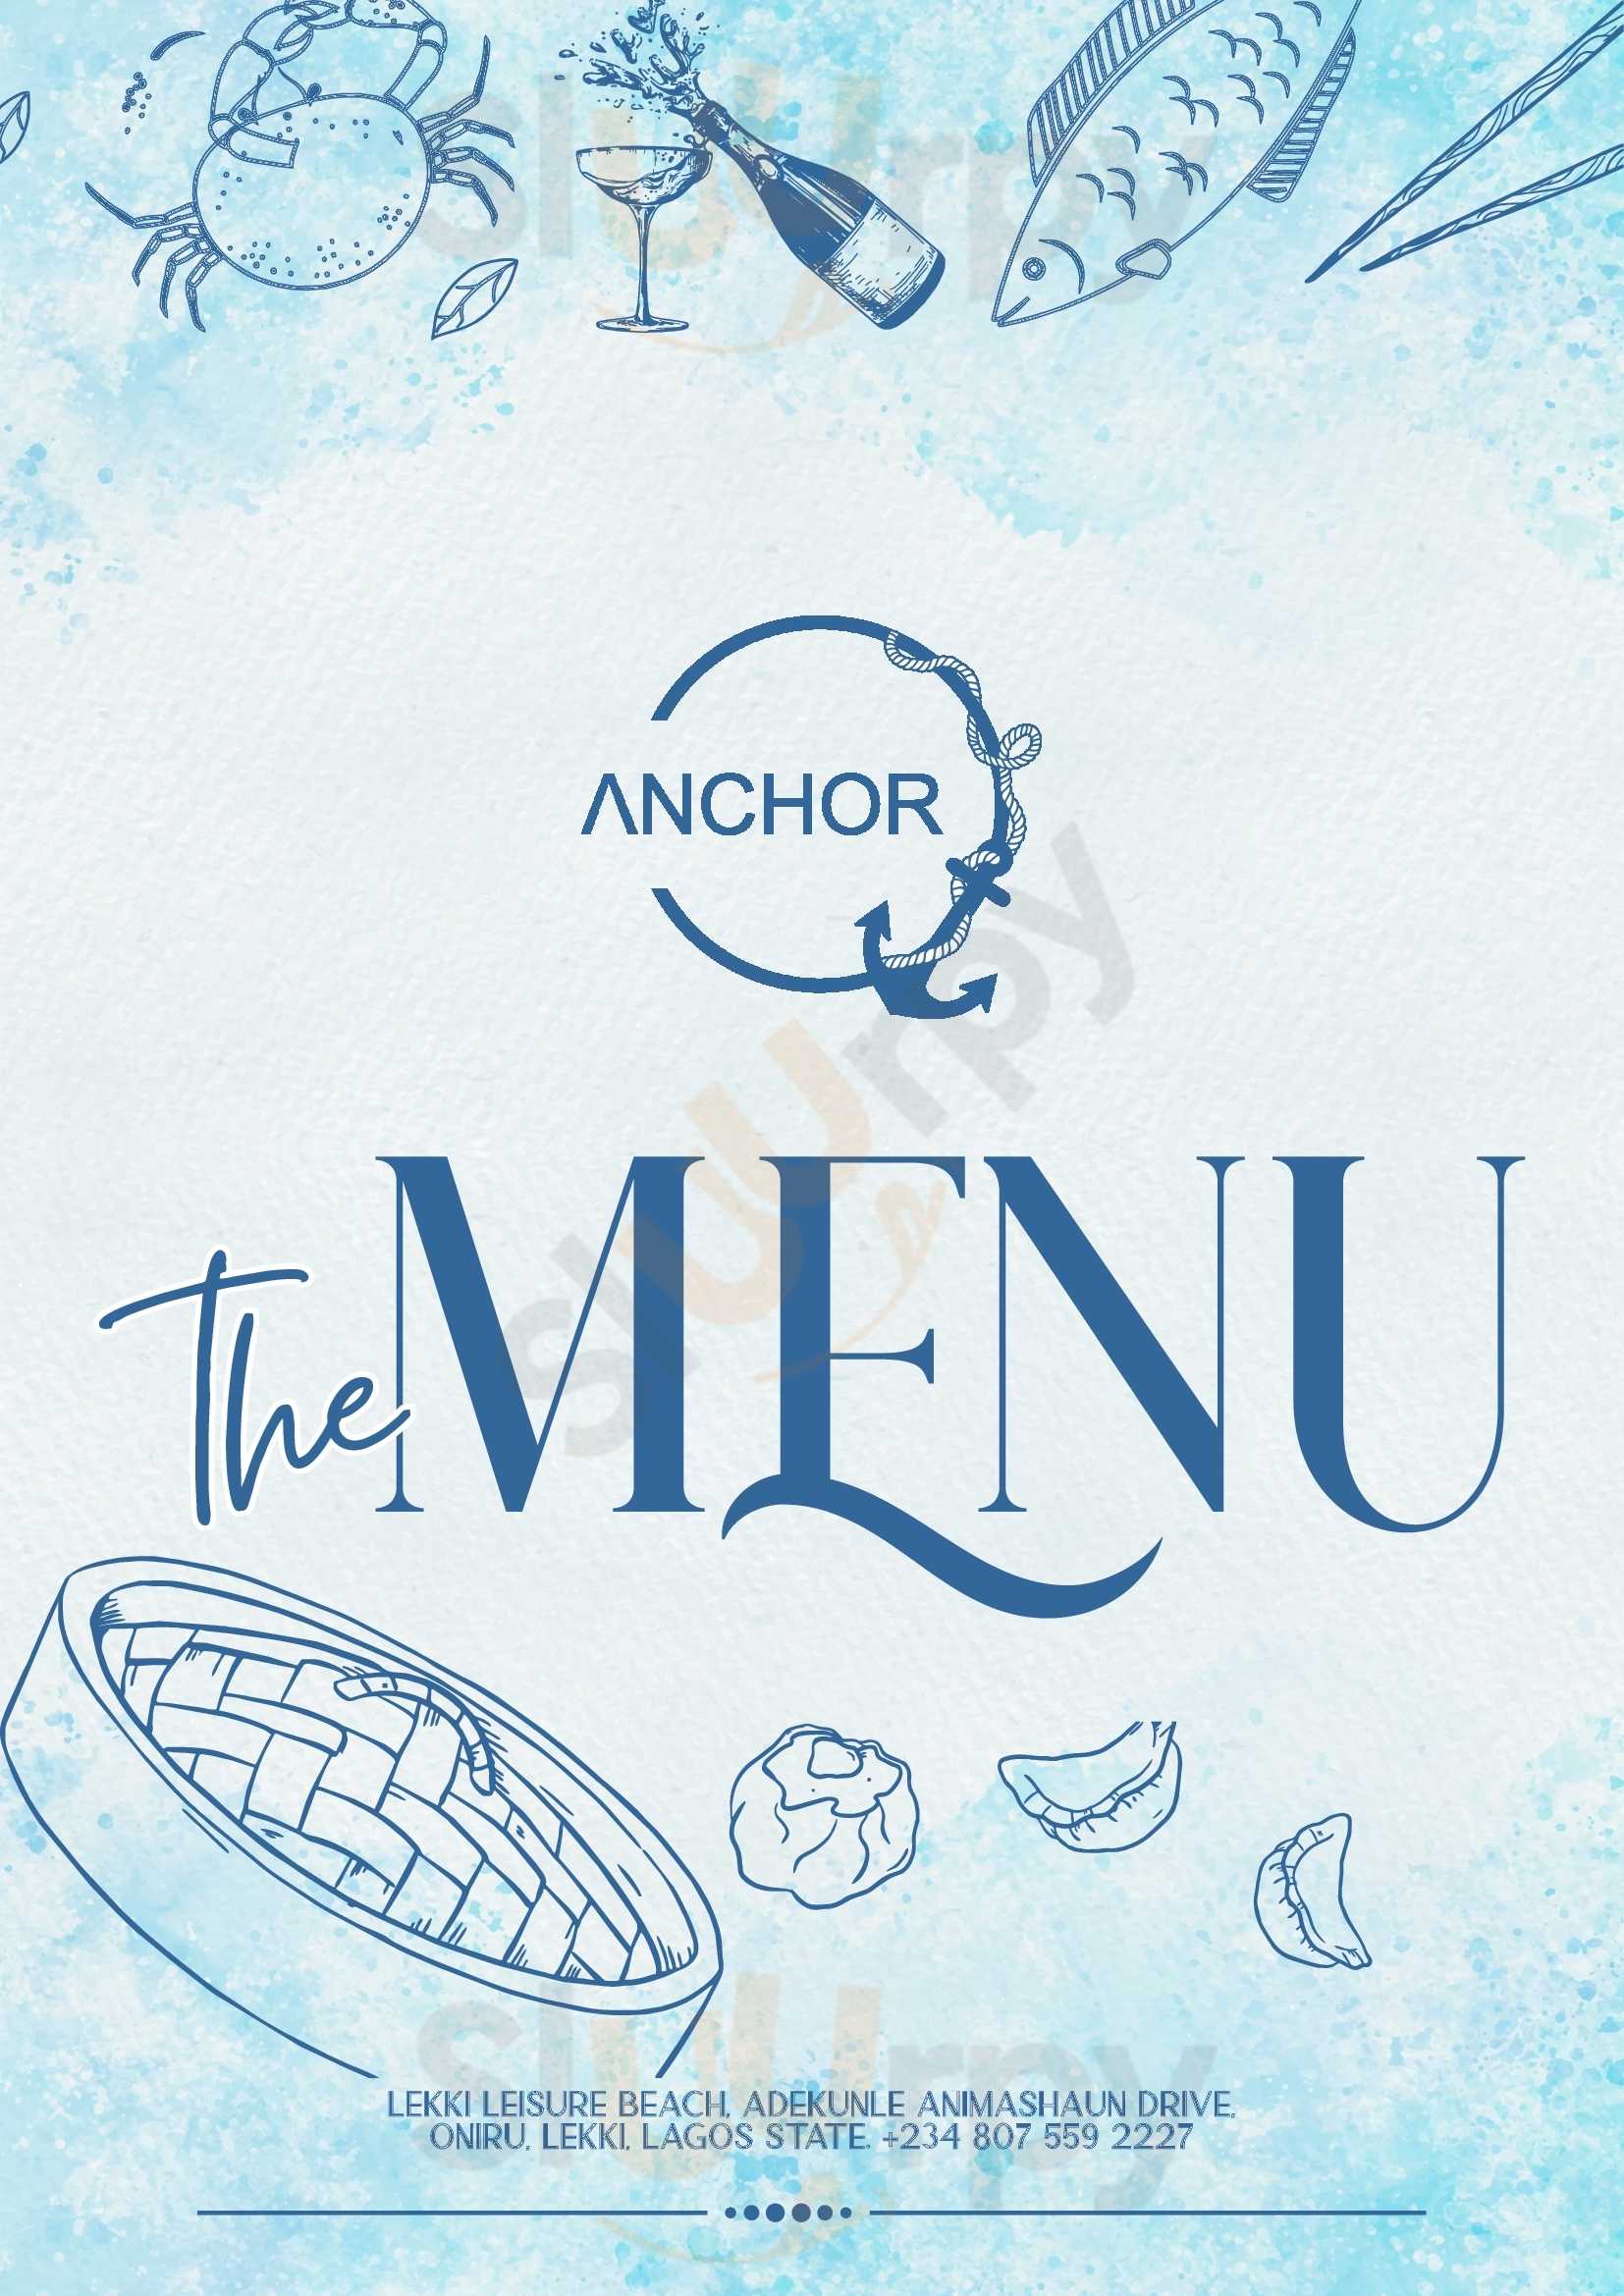 Anchor Restaurant & Bar Lagos Menu - 1